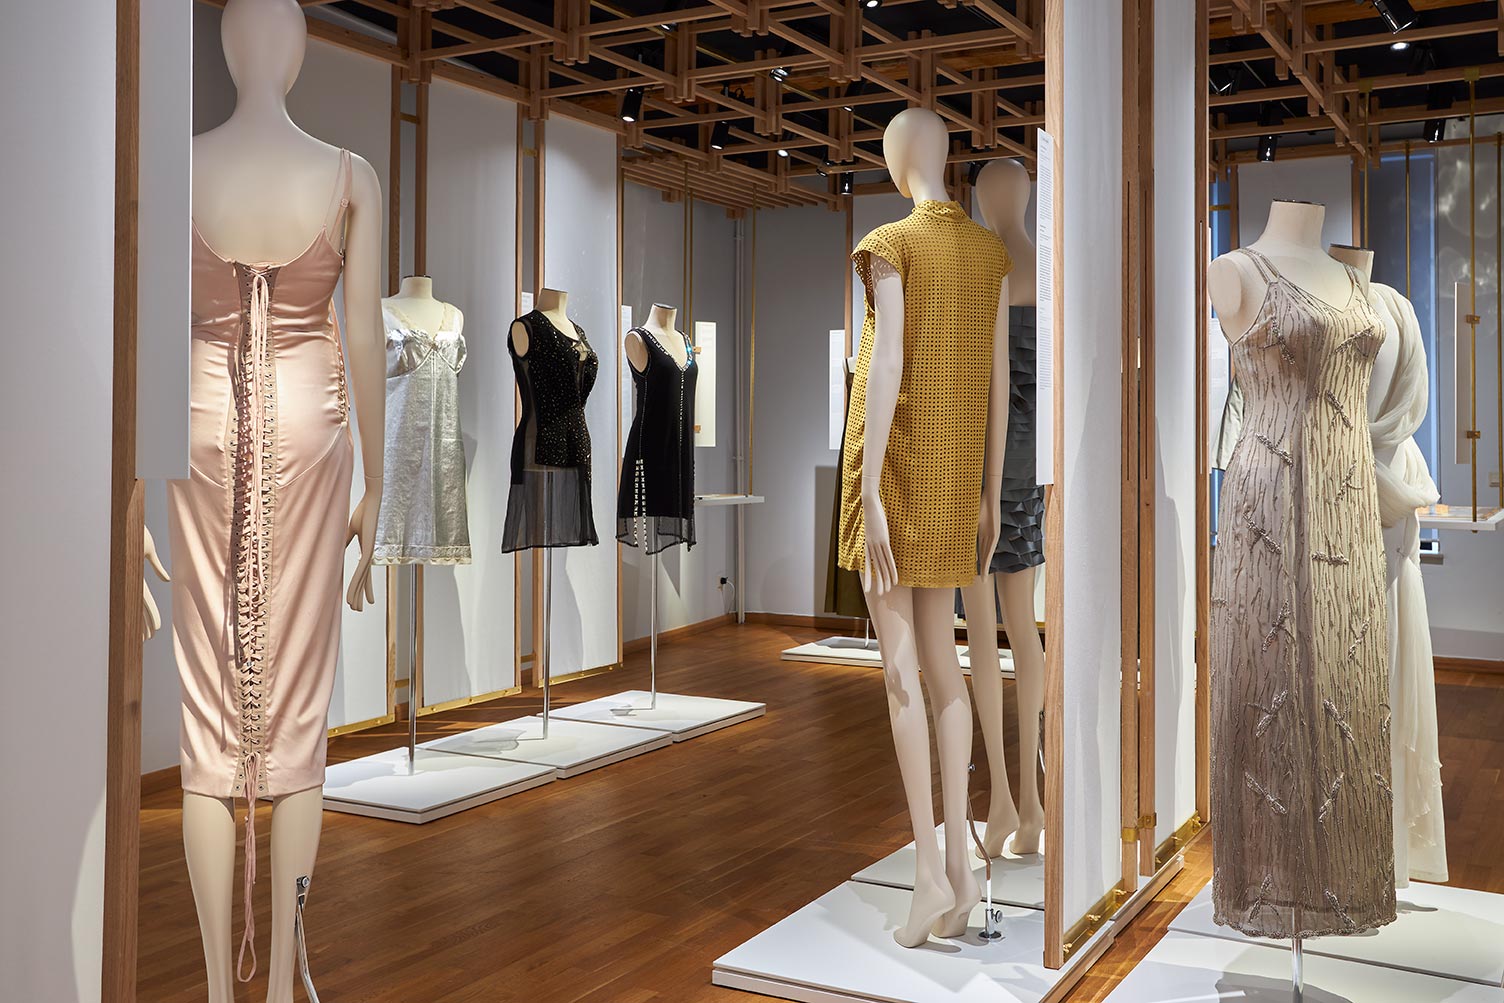 https://www.fashionandlacemuseum.brussels/wp-content/uploads/2020/08/2.Slide-Fashion-Room.jpg